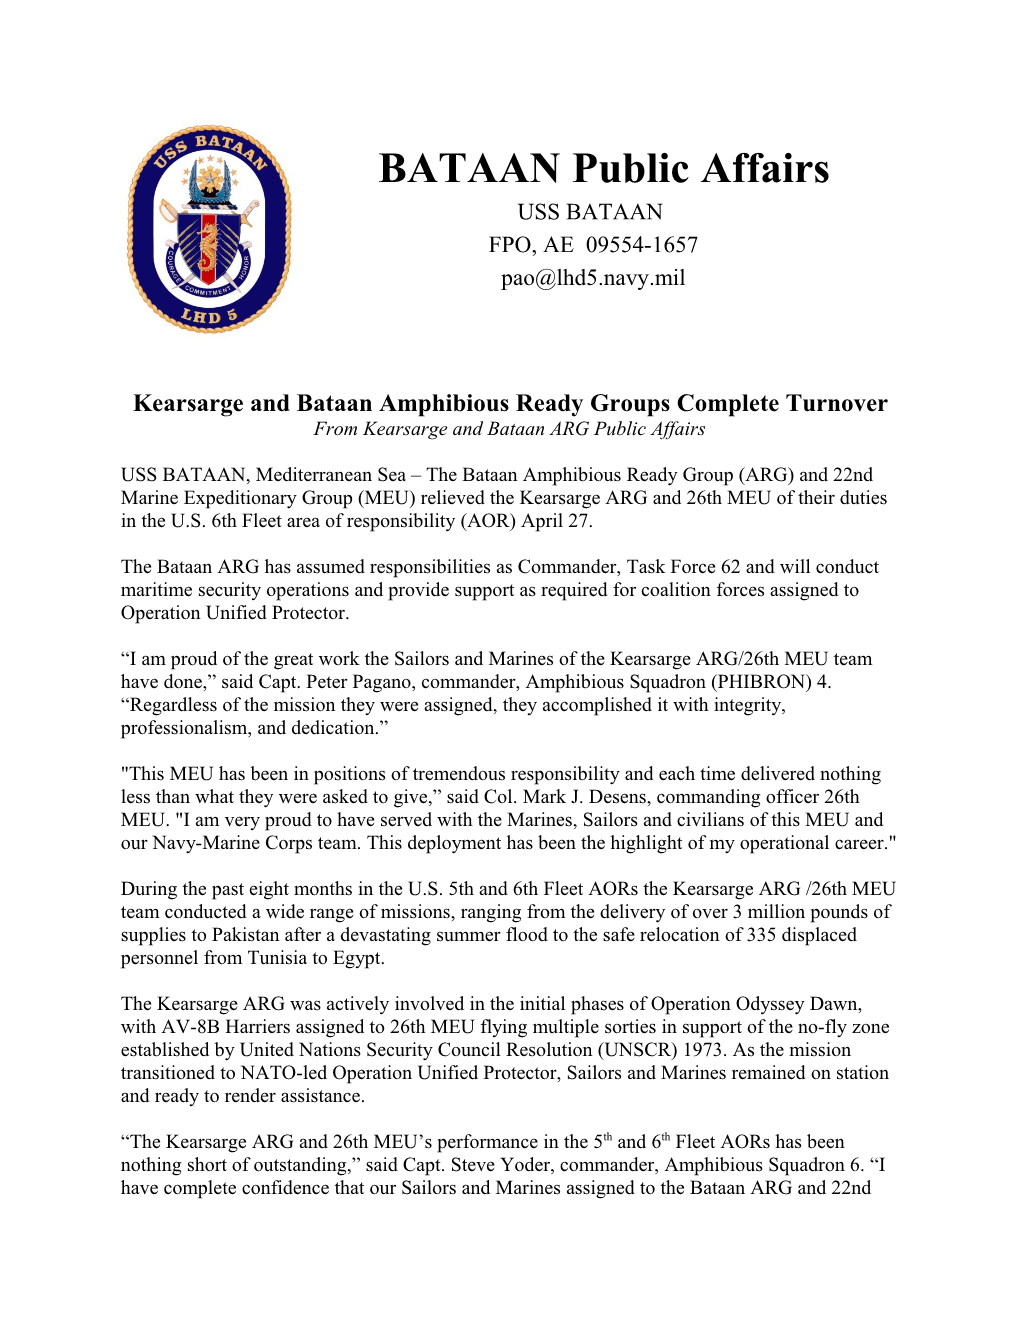 Kearsarge, Bataan Amphibious Ready Groups Complete Turnover